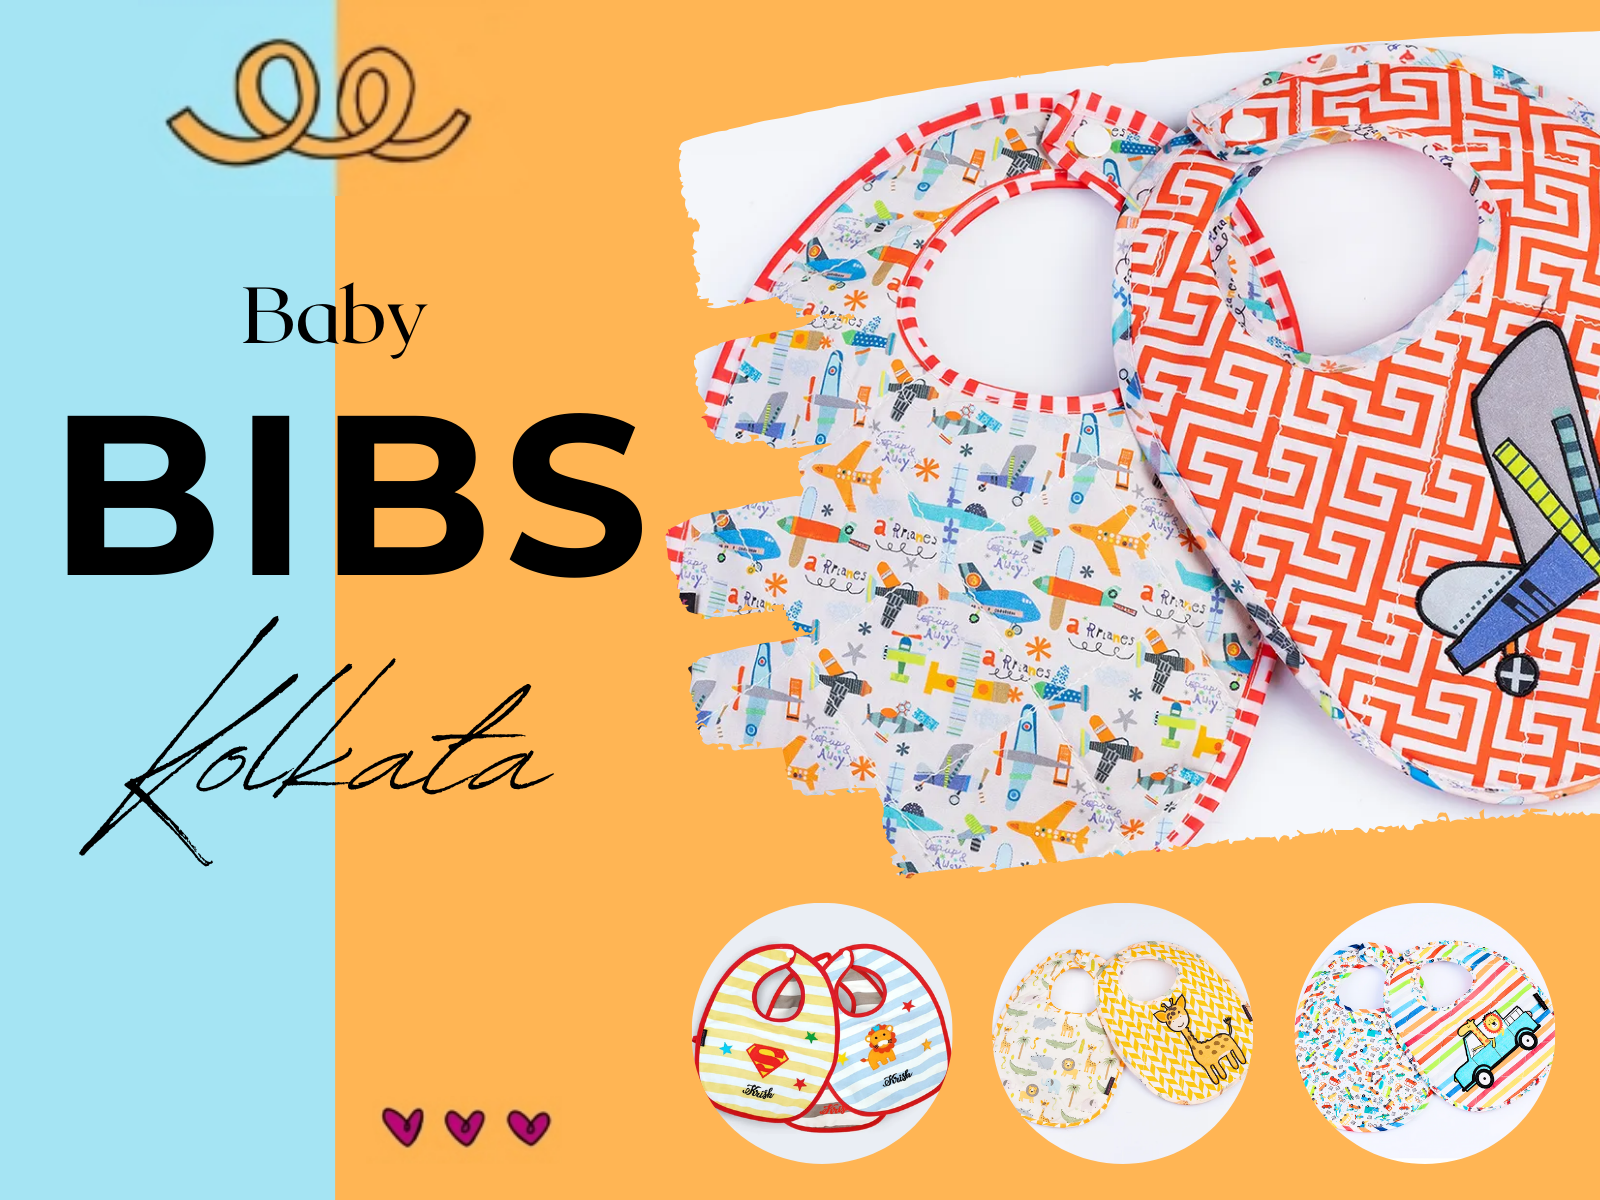 Baby Bibs Kolkata: Exploring Cute And Functional Baby Bibs